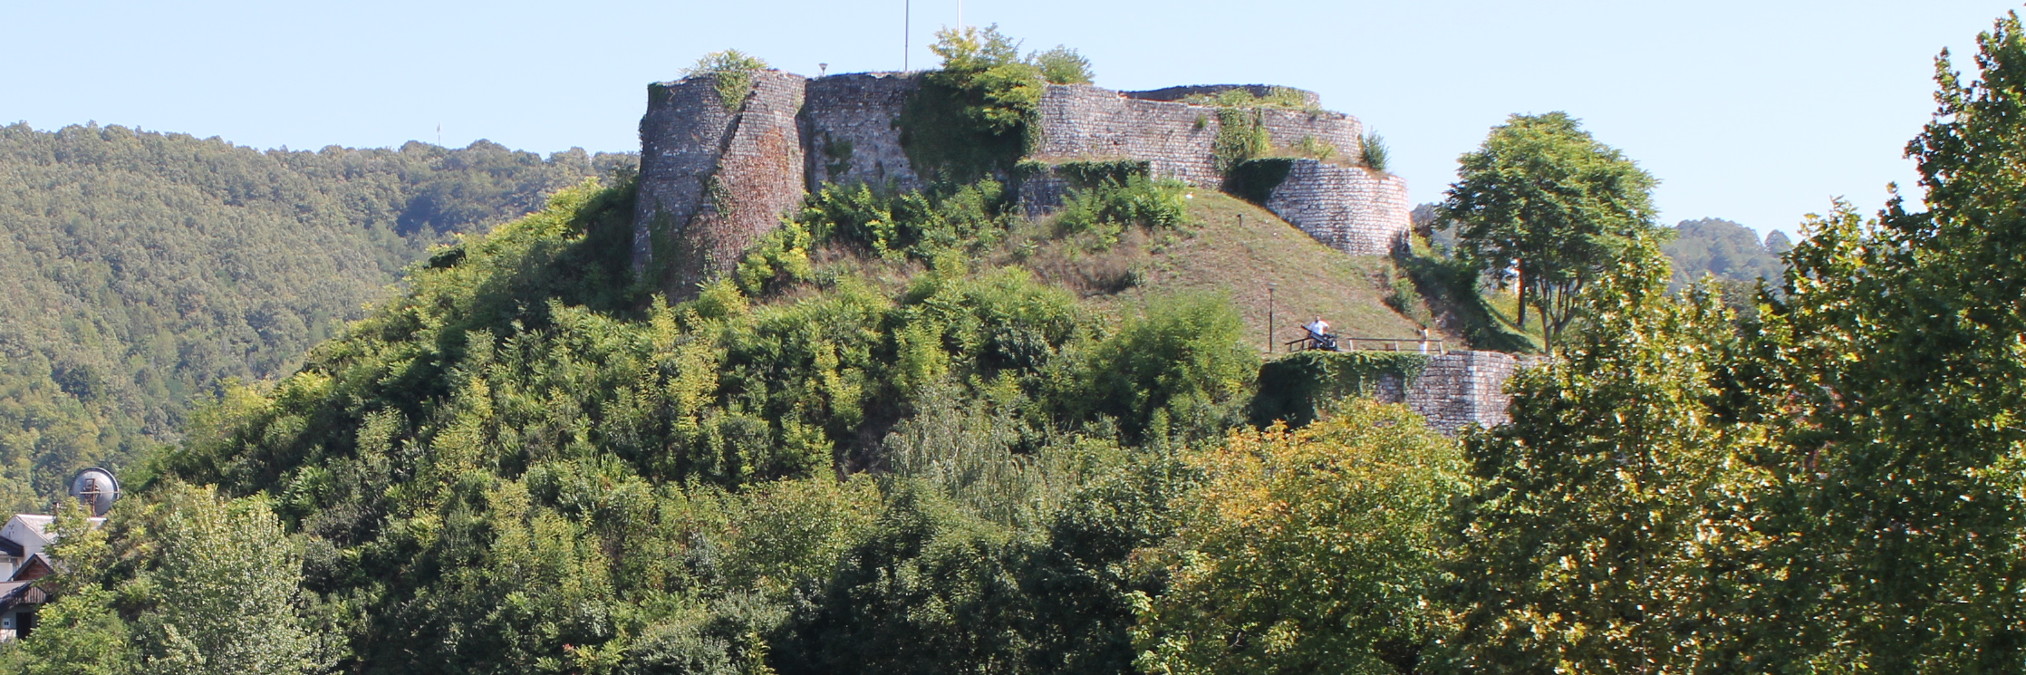 Крепость Псет в Босанской Крупе. Фото: Елена Арсениевич, CC BY-SA 3.0